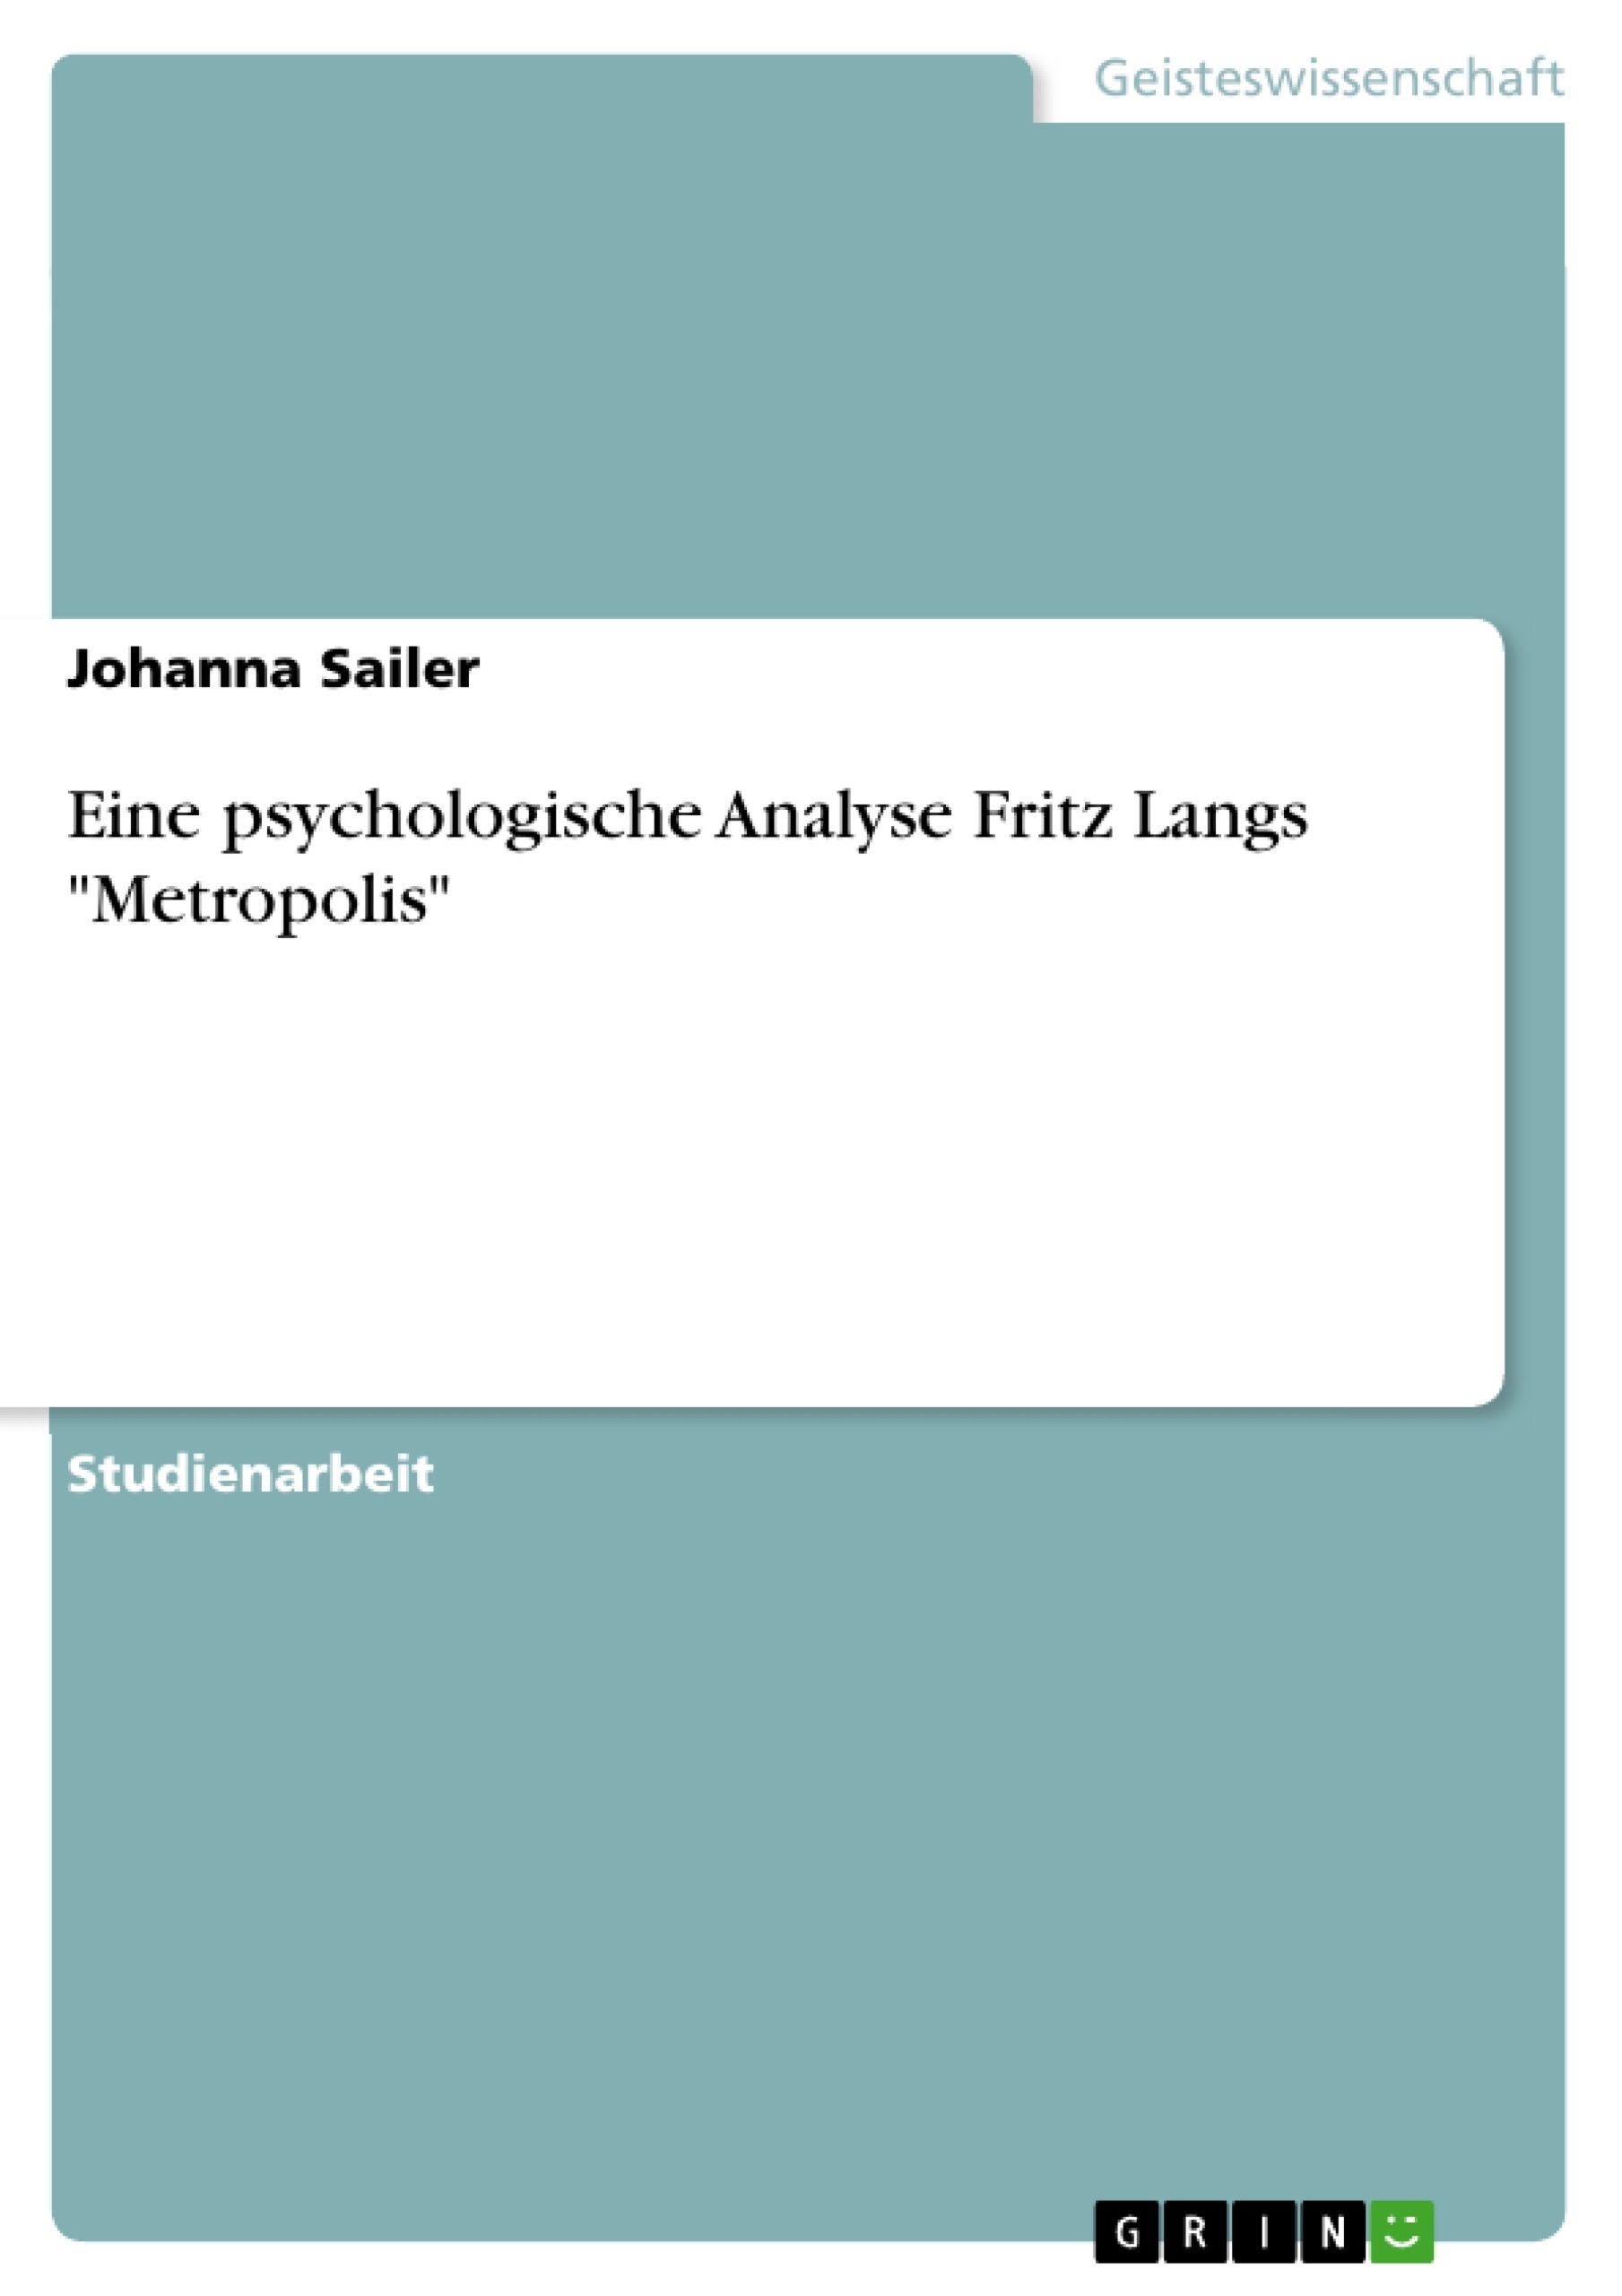 Titre: Eine psychologische Analyse Fritz Langs "Metropolis"